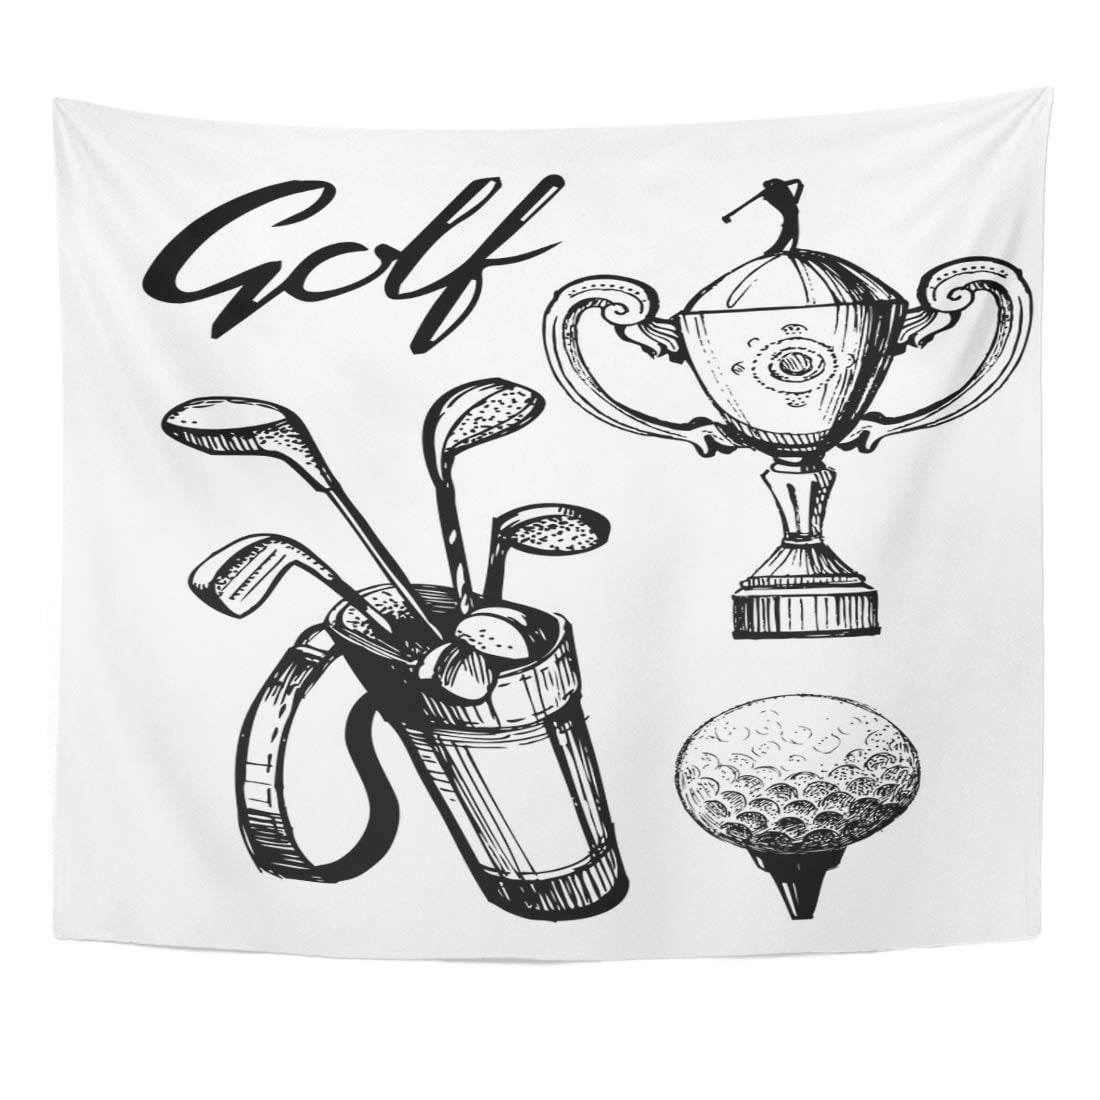 Golf Drawings for Sale - Fine Art America